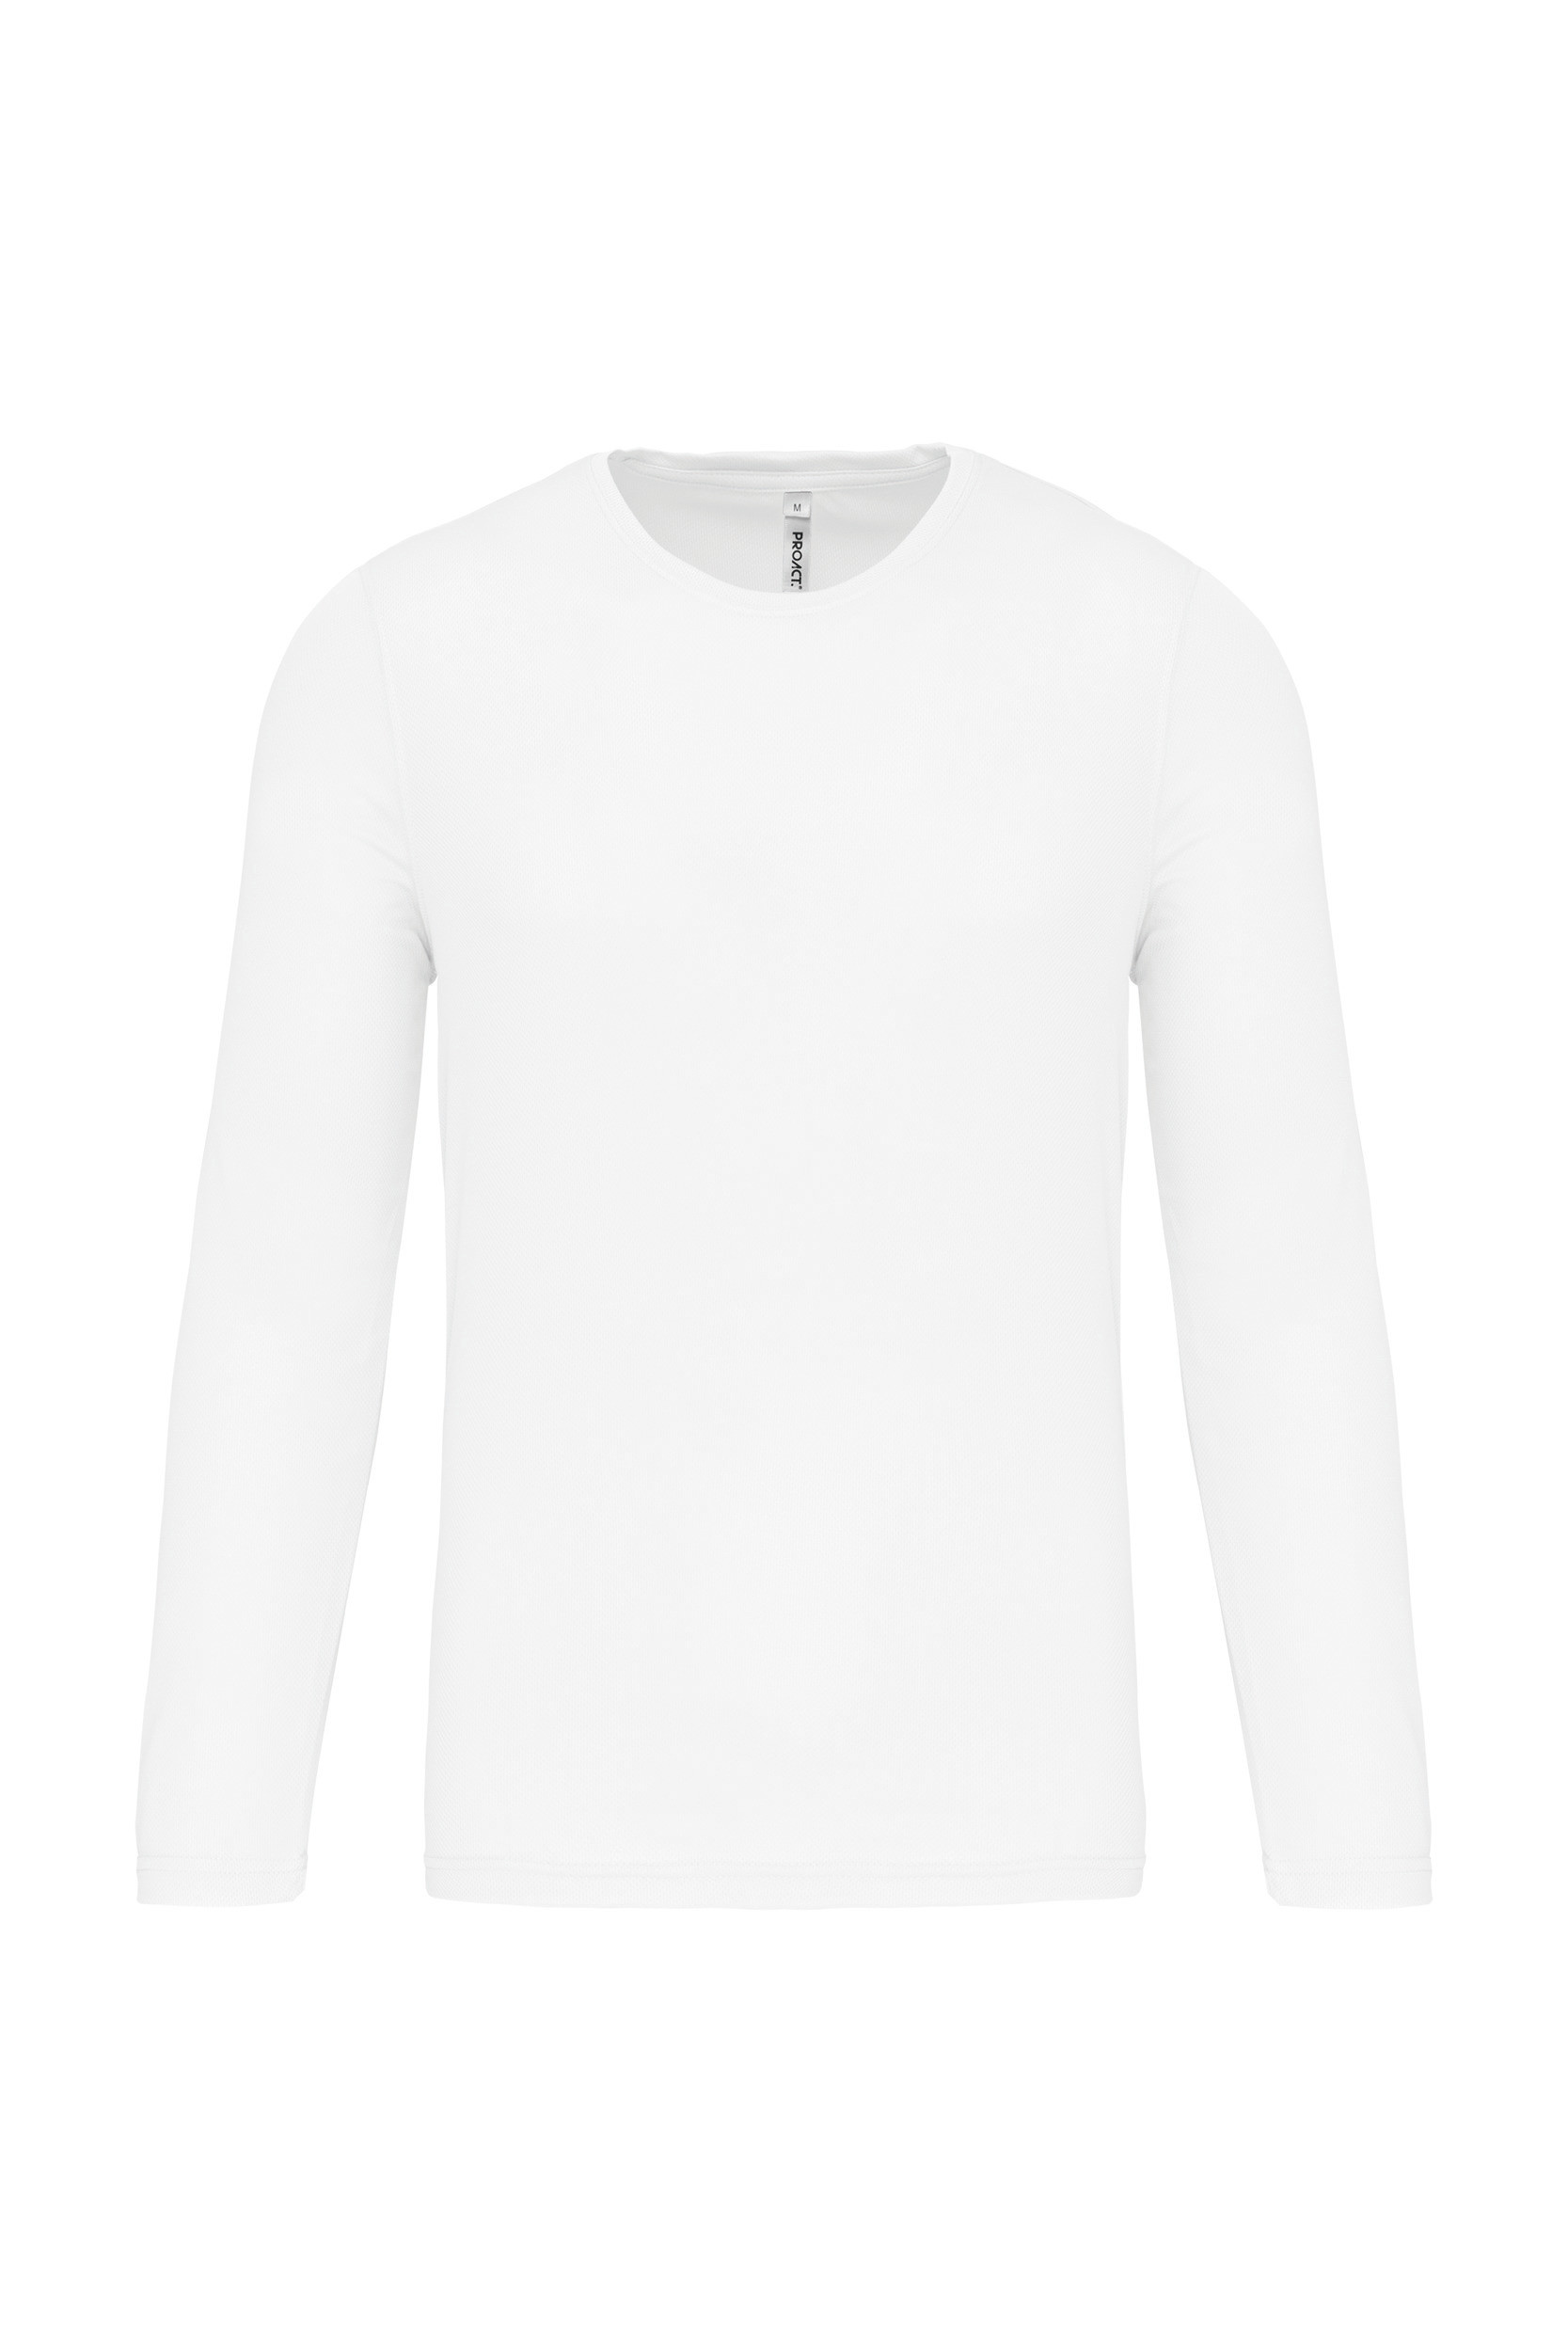 PA444 - T-shirt Sport respirant Manches longues 140 Femme PROACT -  Shirt-Label